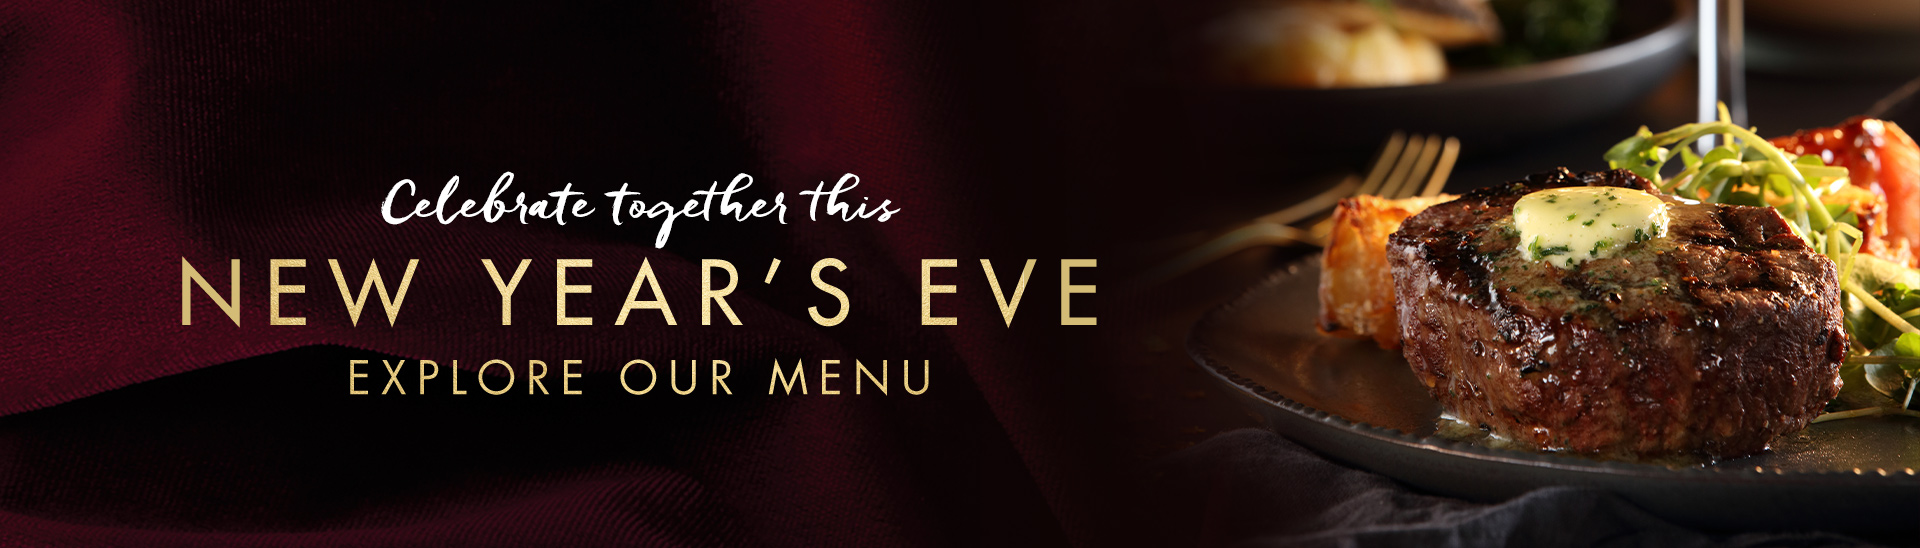 New Year’s eve menu at Miller & Carter Herne Bay 